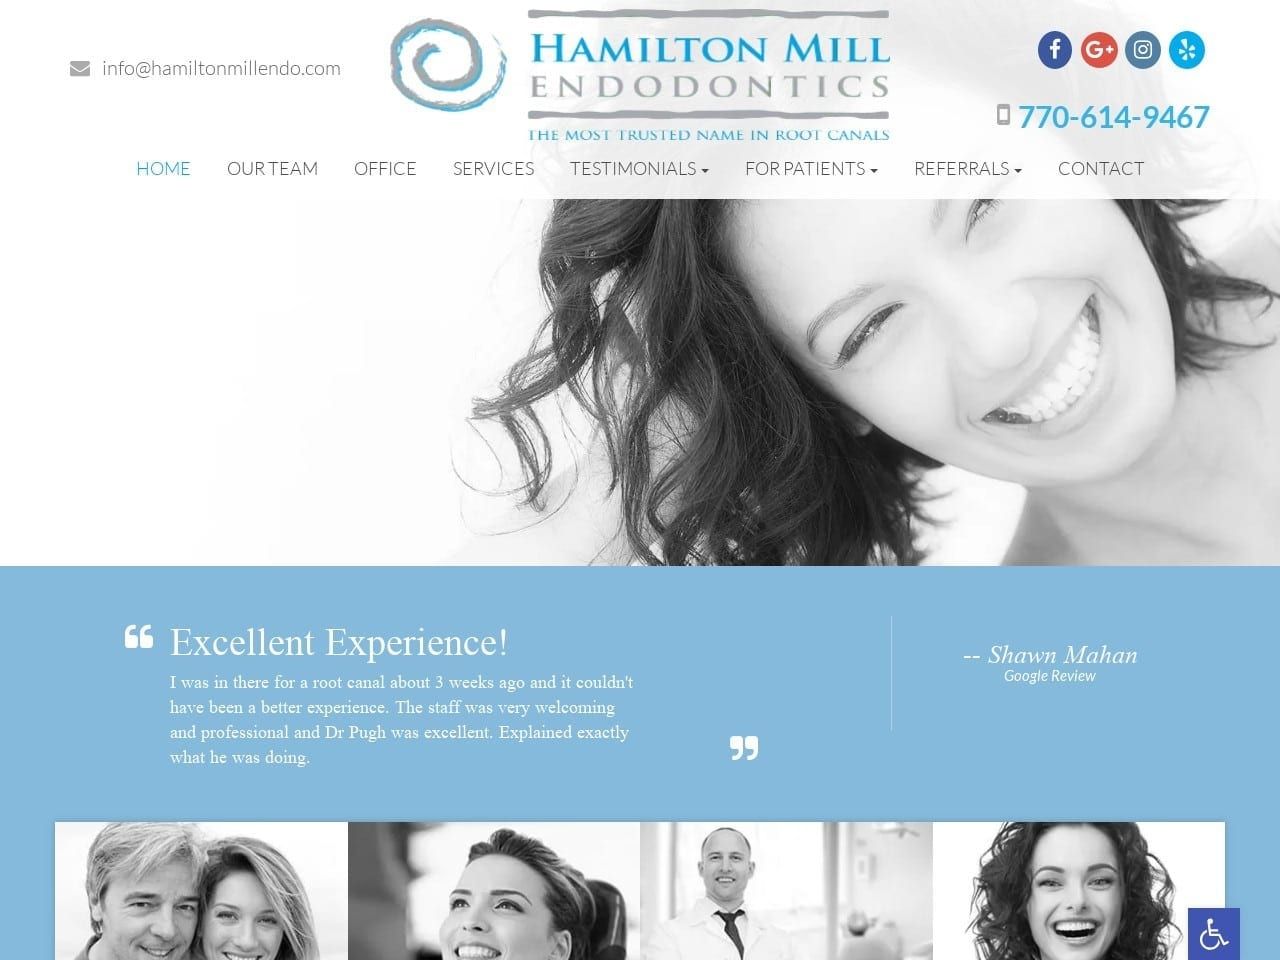 Hamilton Mill Endodontics Website Screenshot From Url Hamiltonmillendo.com